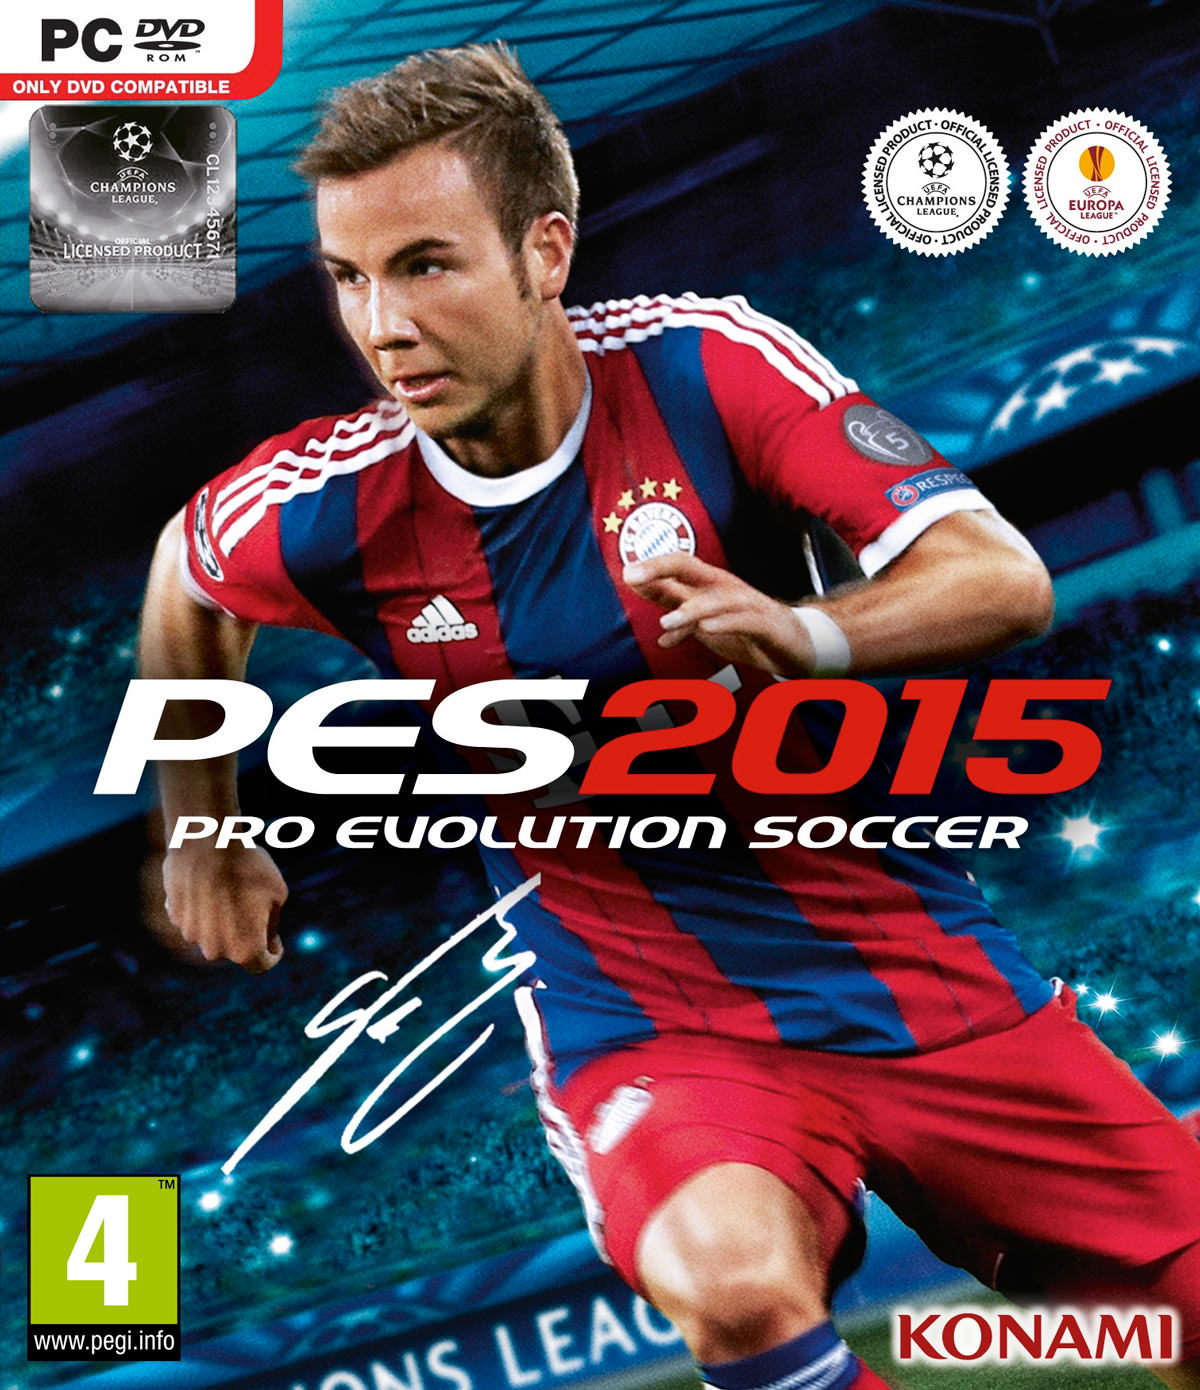 PC Pro Evolution Soccer 2015